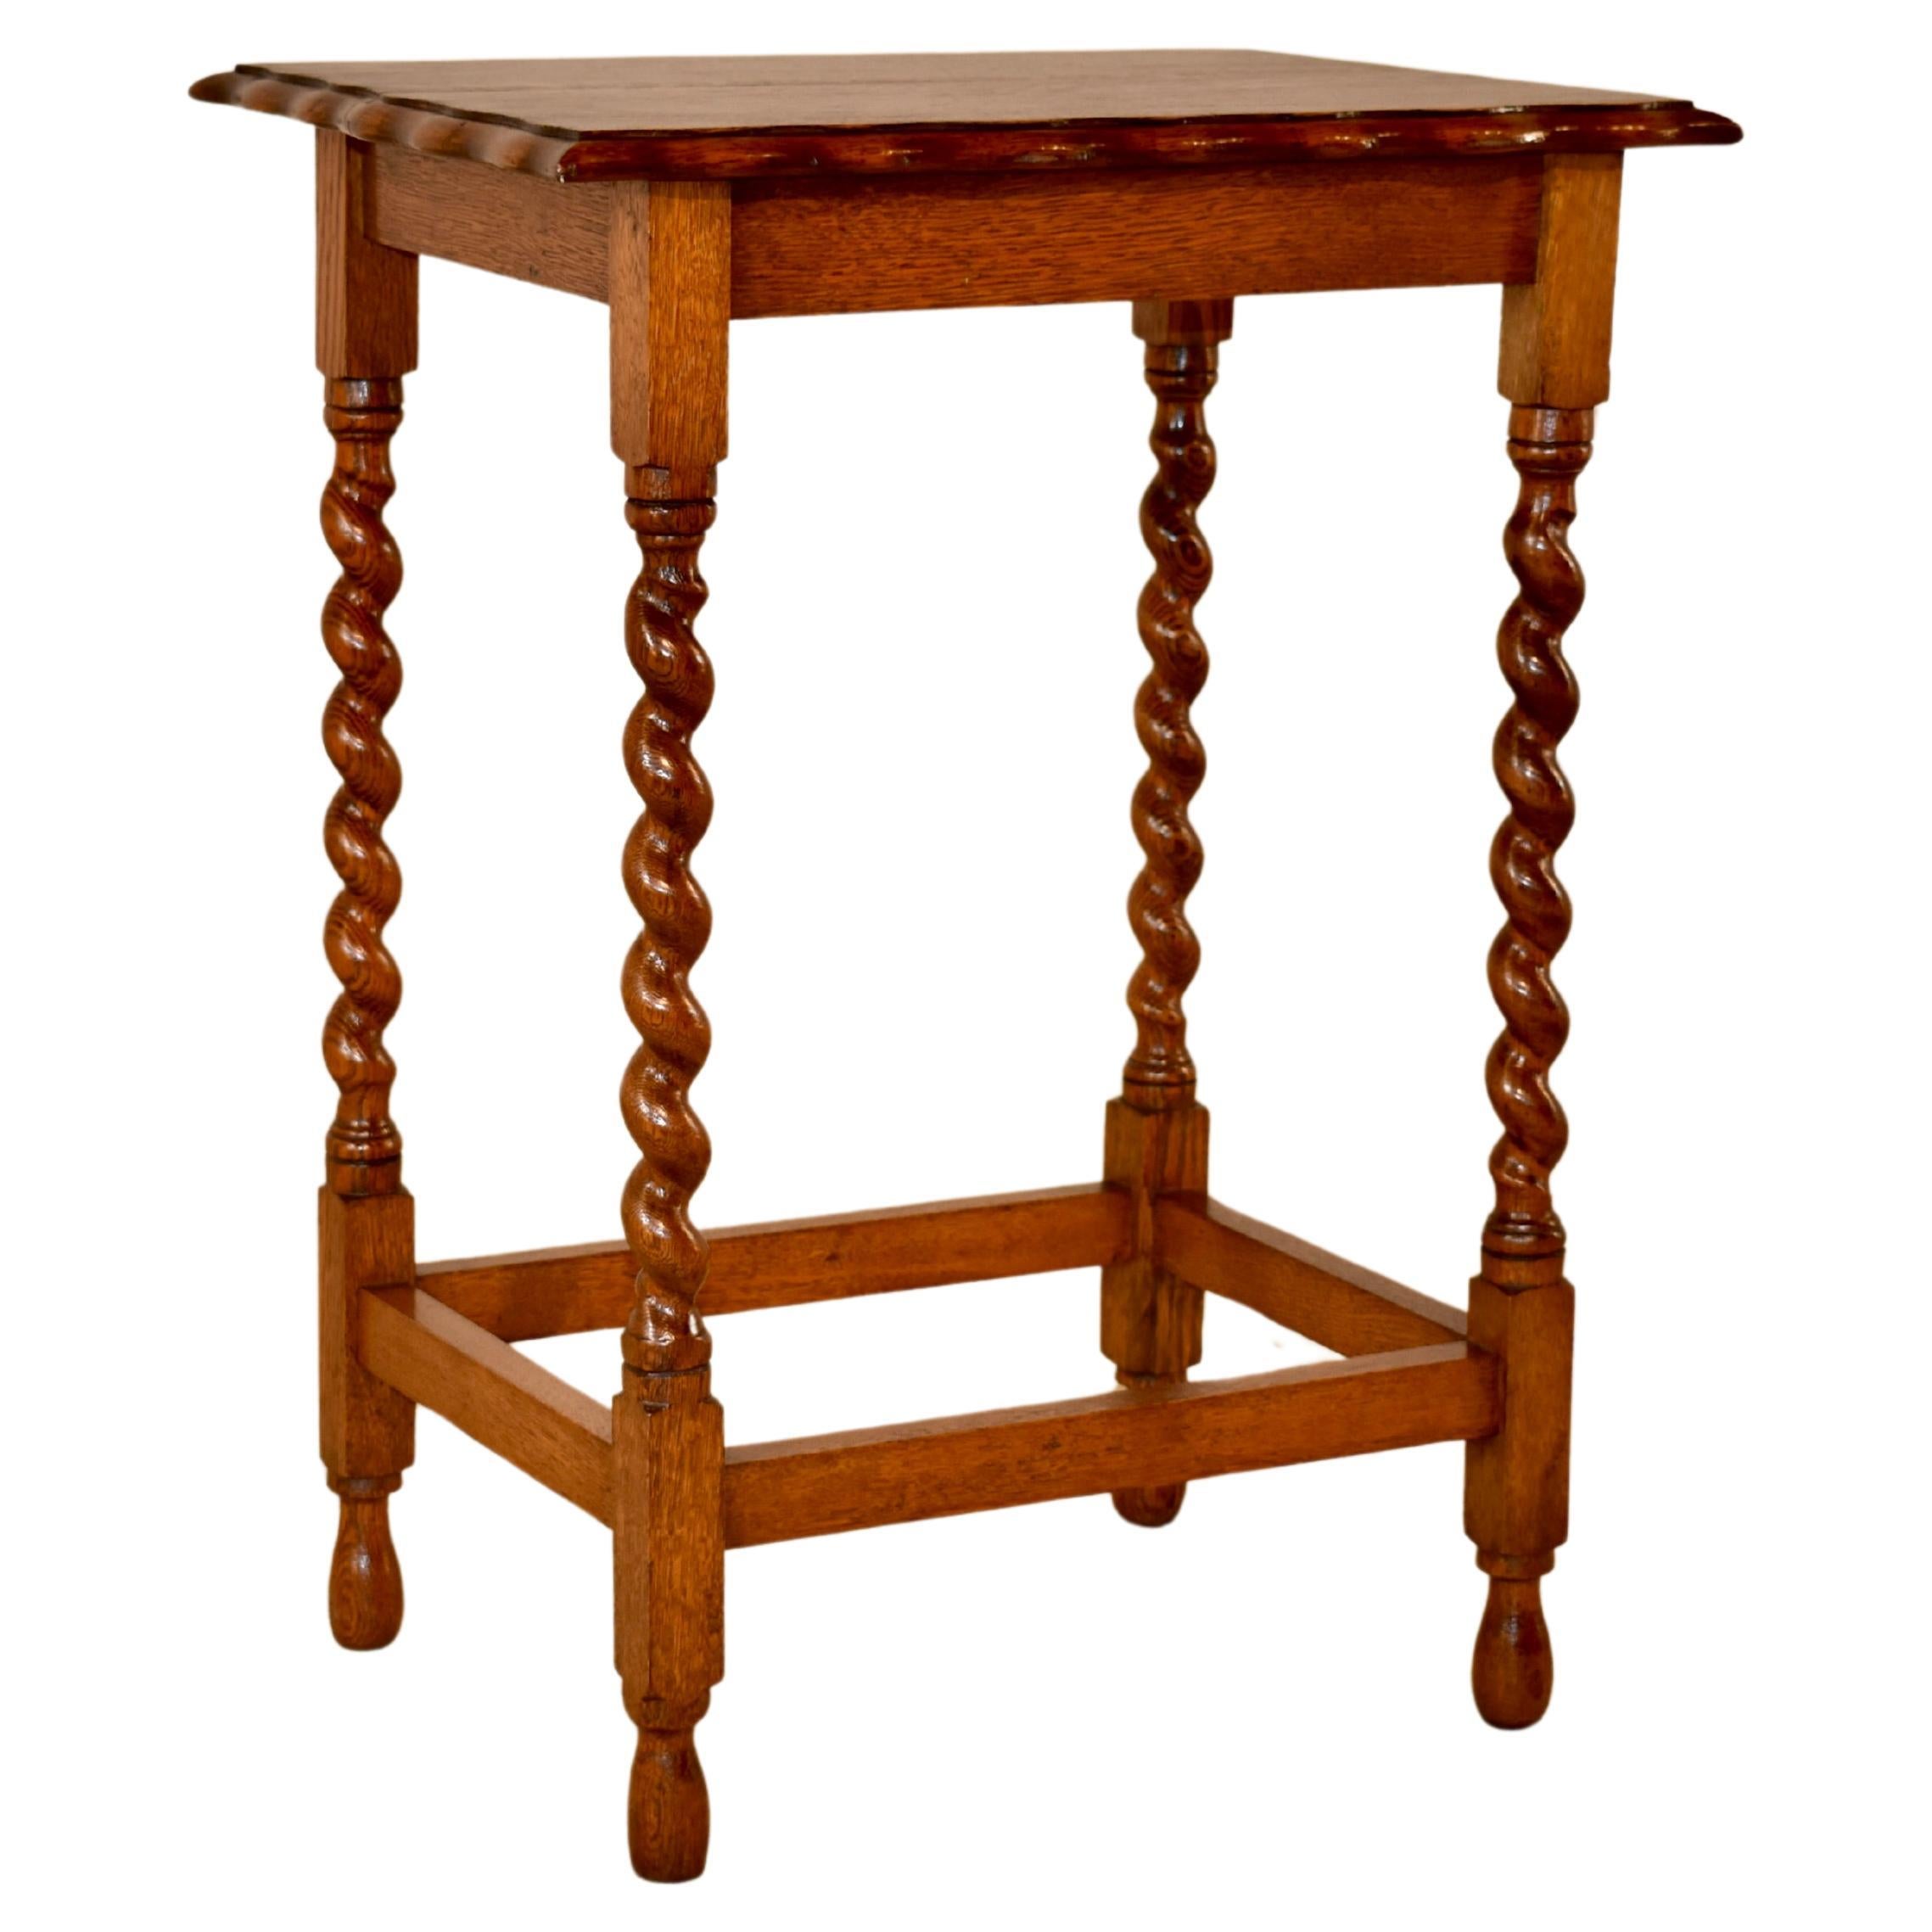 English Oak Side Table, Circa 1900